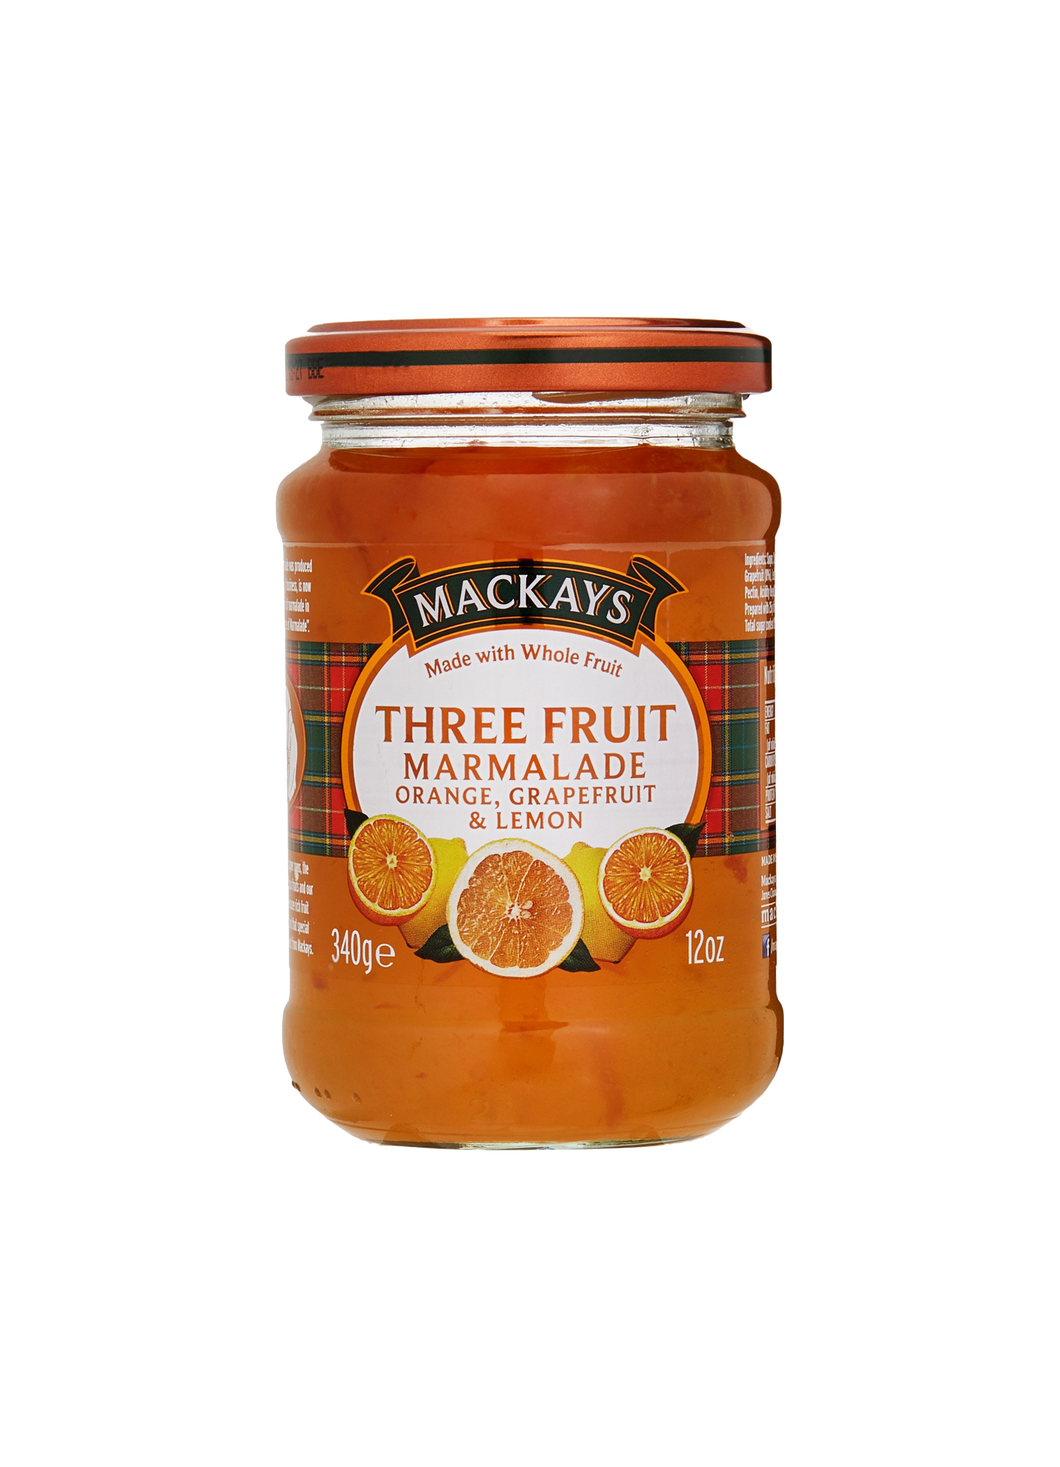 Mackays Three Fruit Marmalade Orange, Grapefruit, & Lemon 340g